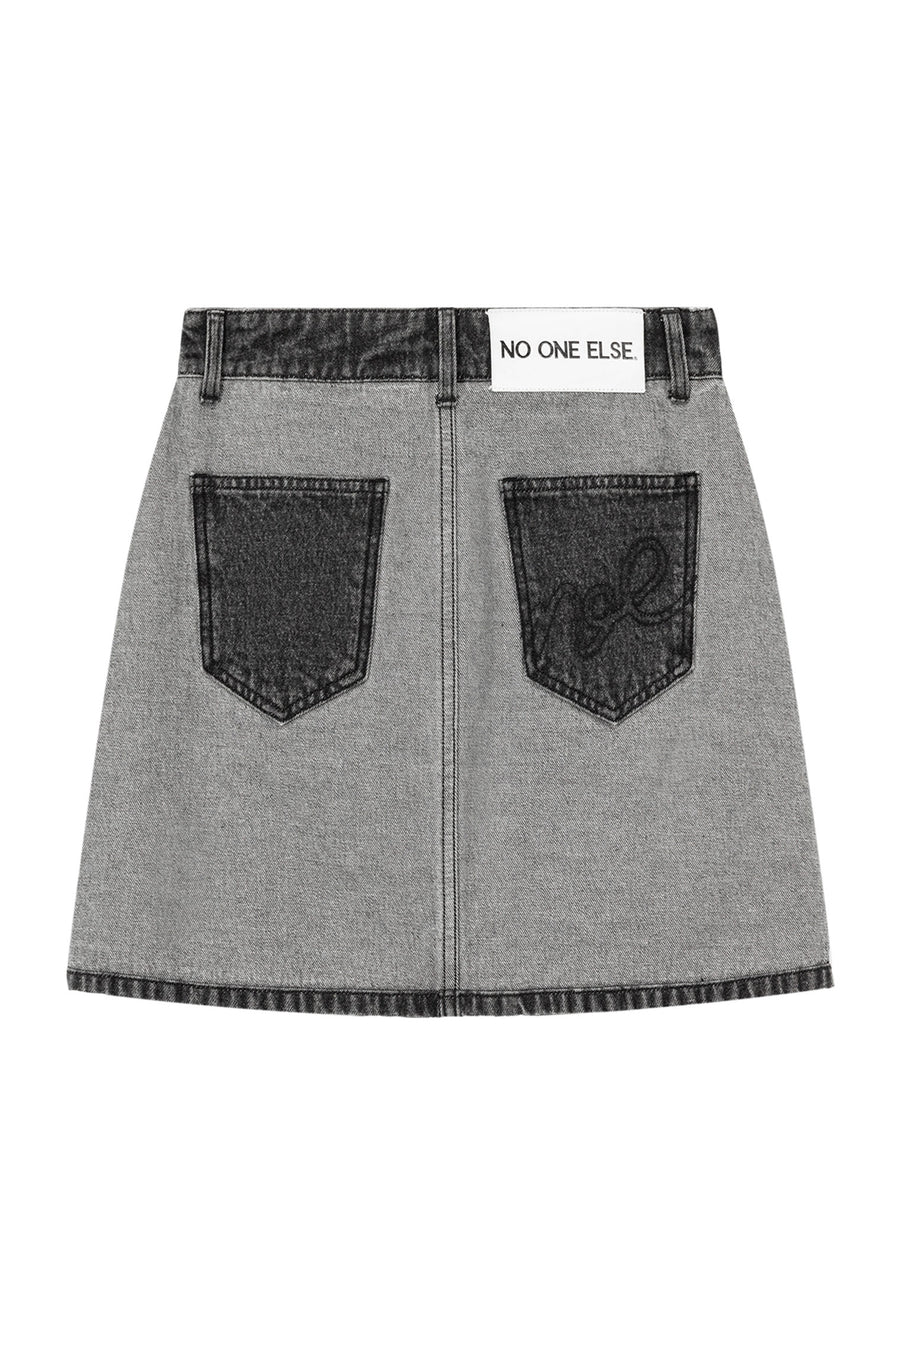 CHUU Inside Out Lined Denim Skirt